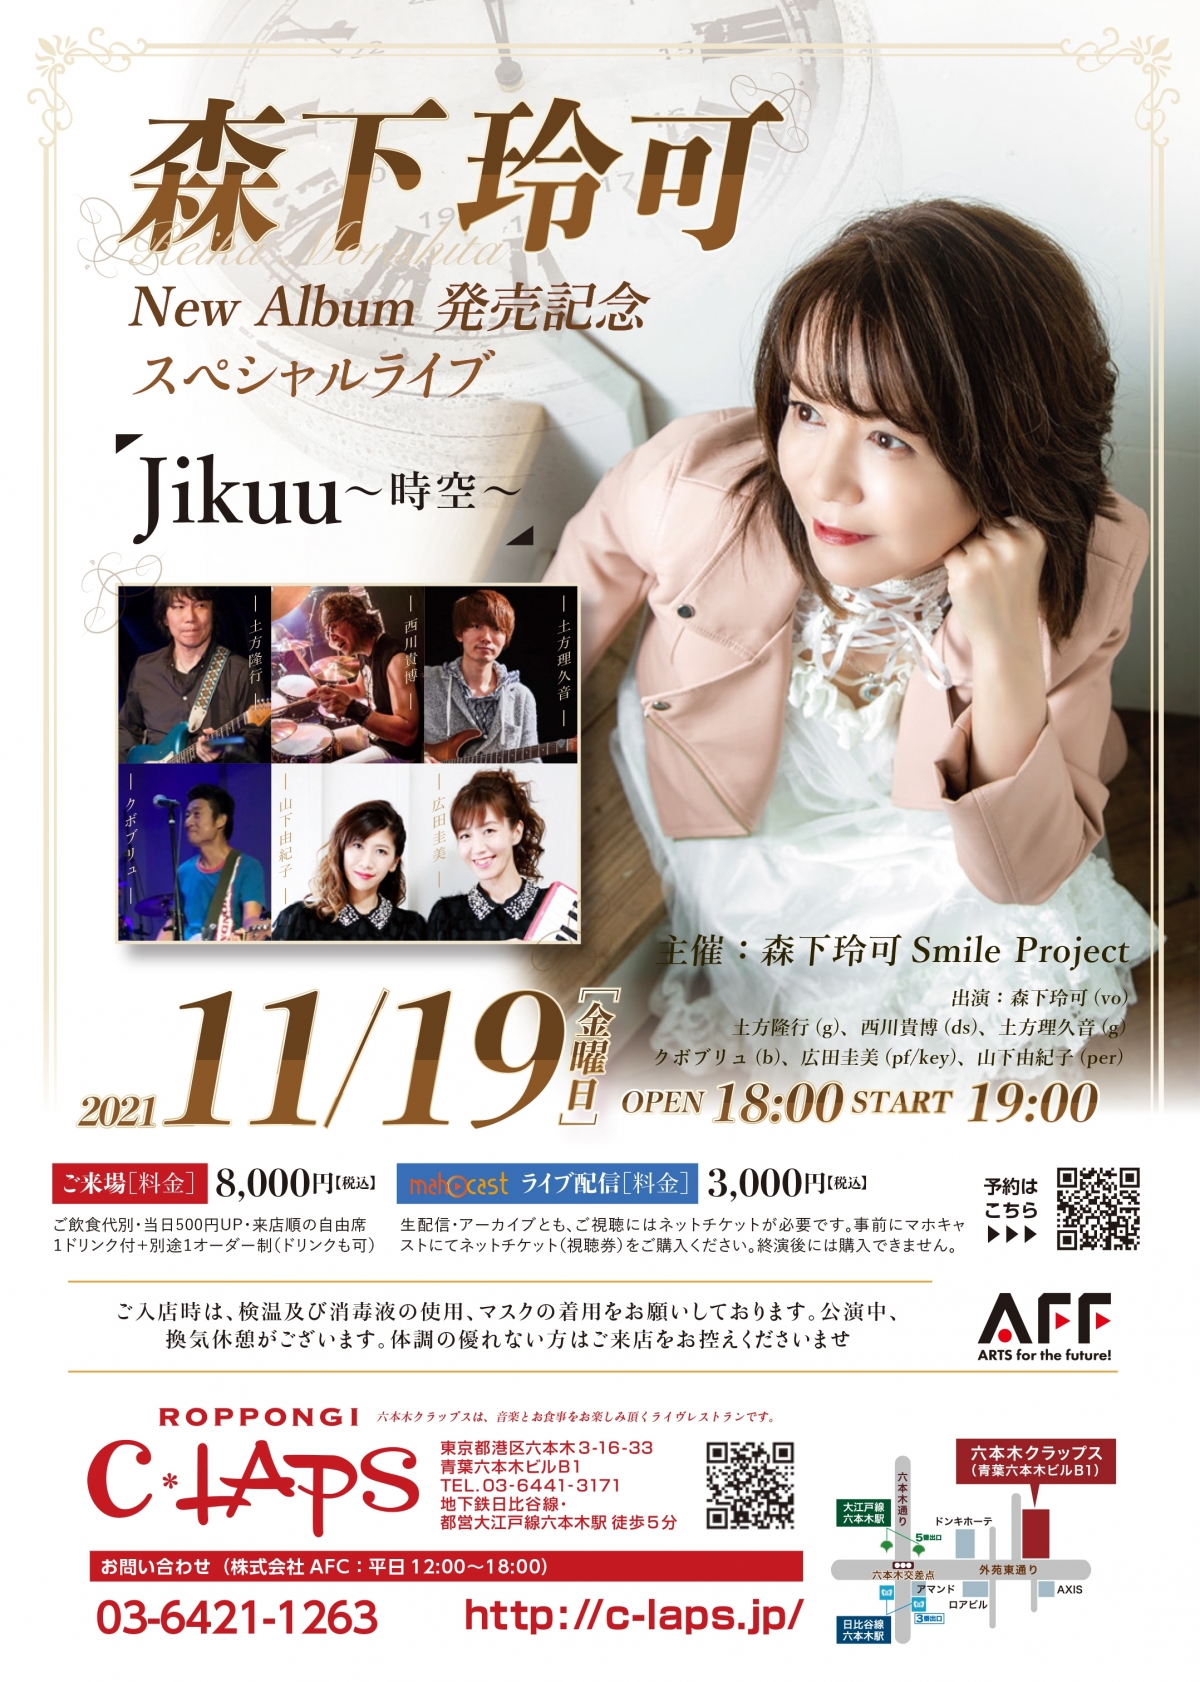 「Jikuu〜時空〜」発表ライブも決定しました！是非、お越しください。